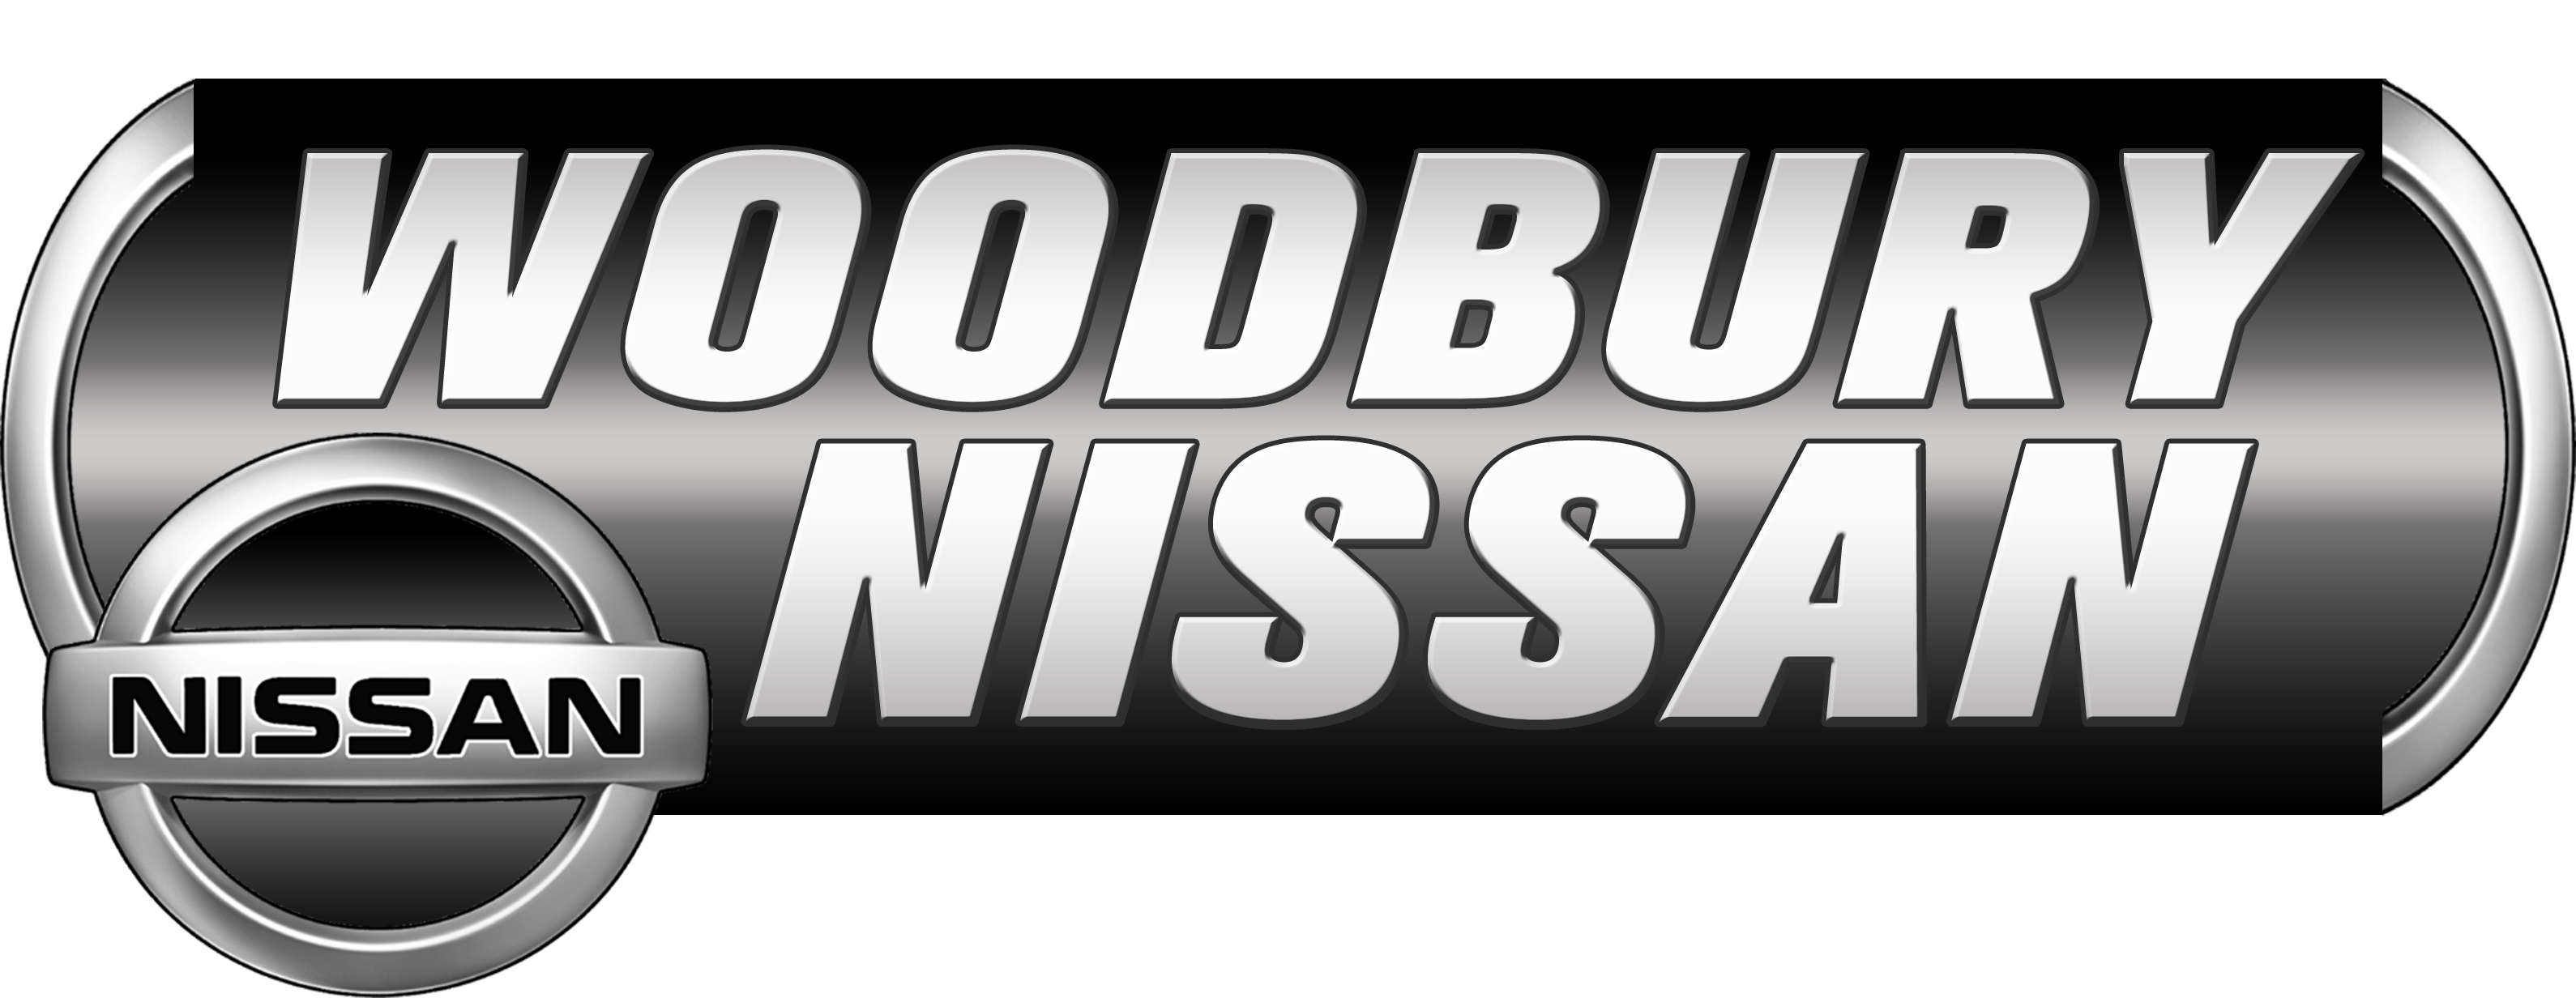 Woodbury nissan fantasy football 2013 #8